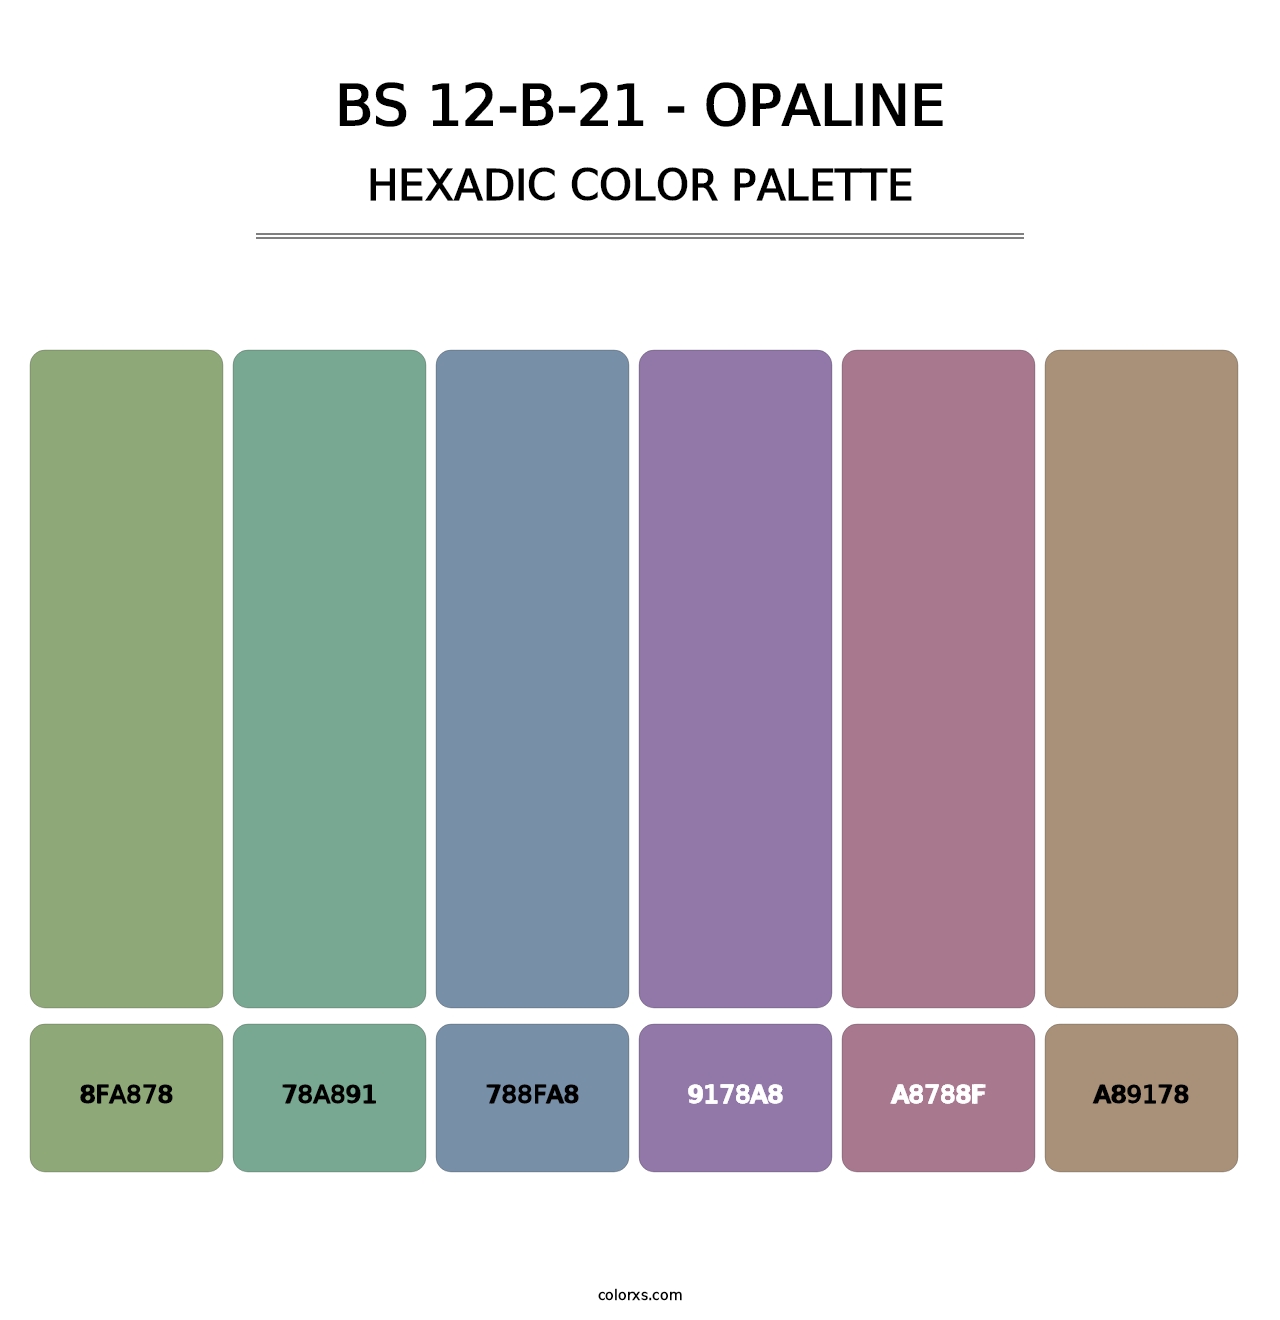 BS 12-B-21 - Opaline - Hexadic Color Palette